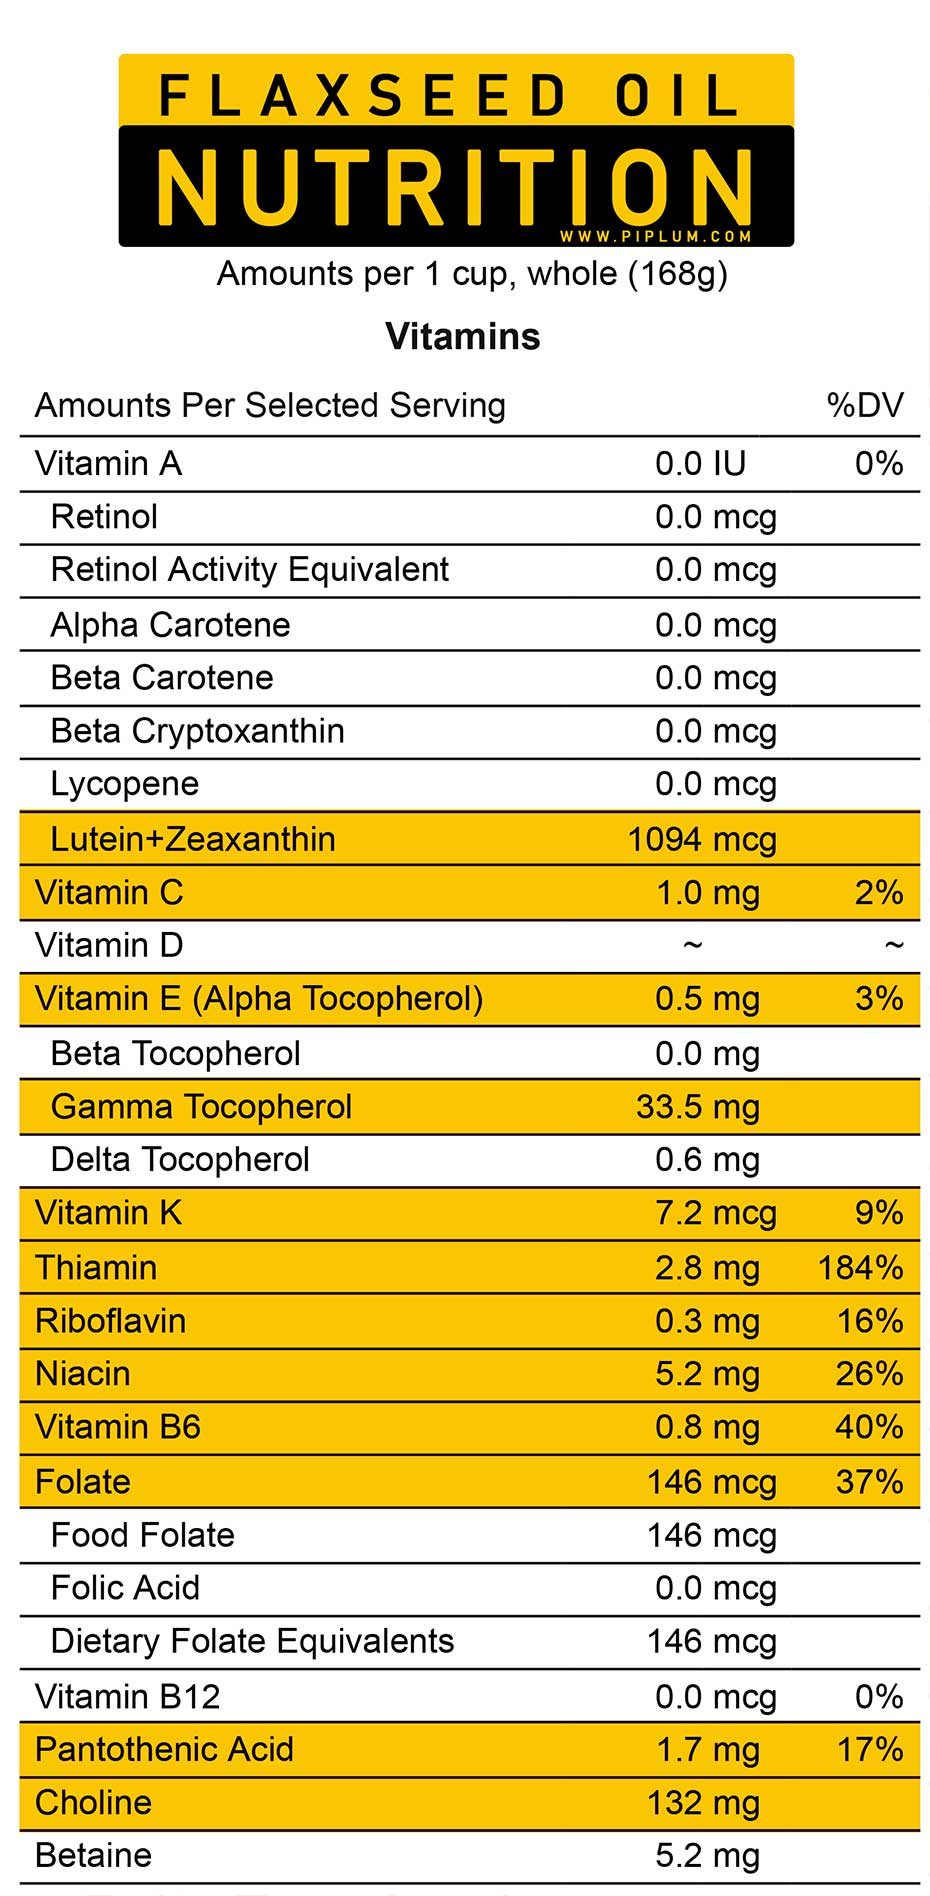 Flaxseed oil nutrition table. Vitamins.